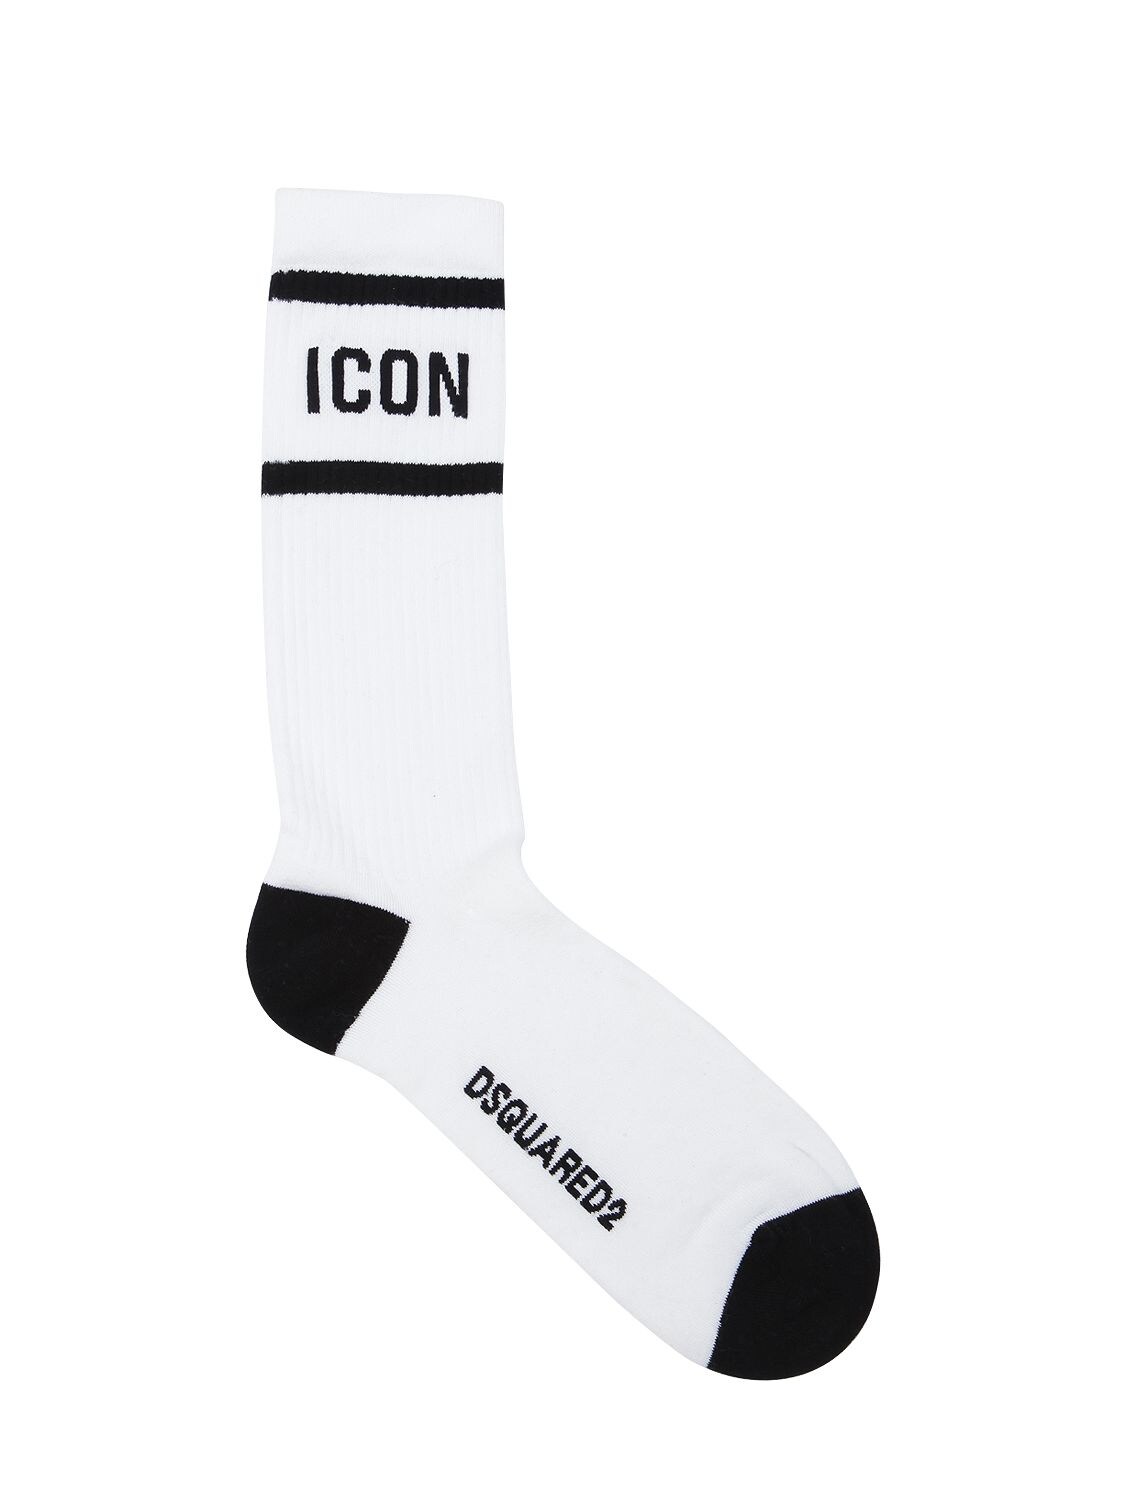 Dsquared2 Underwear Icon Socks In White/black